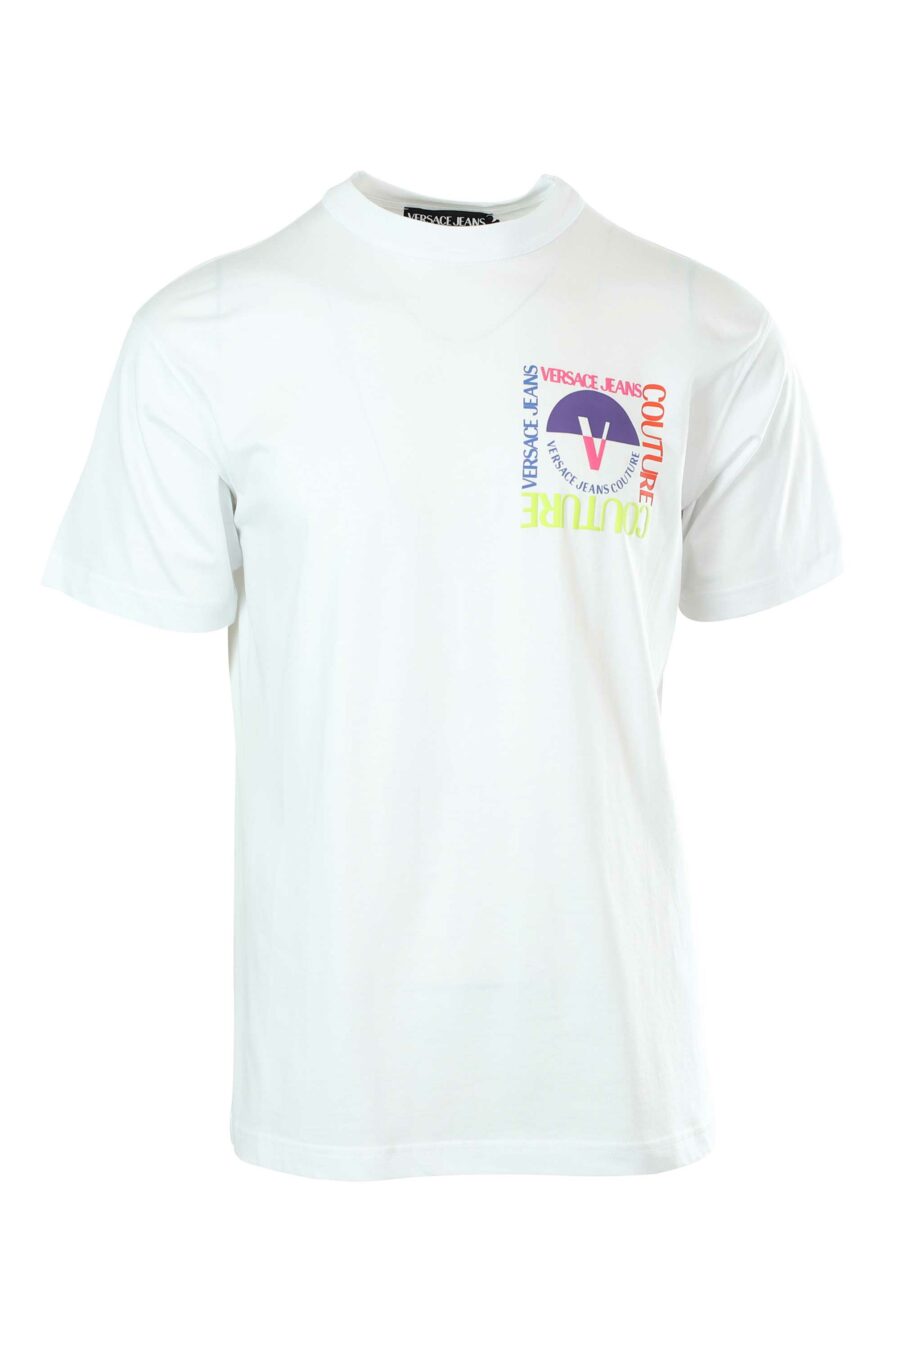 Camiseta blanca con minilogo multicolor - 8052019235029